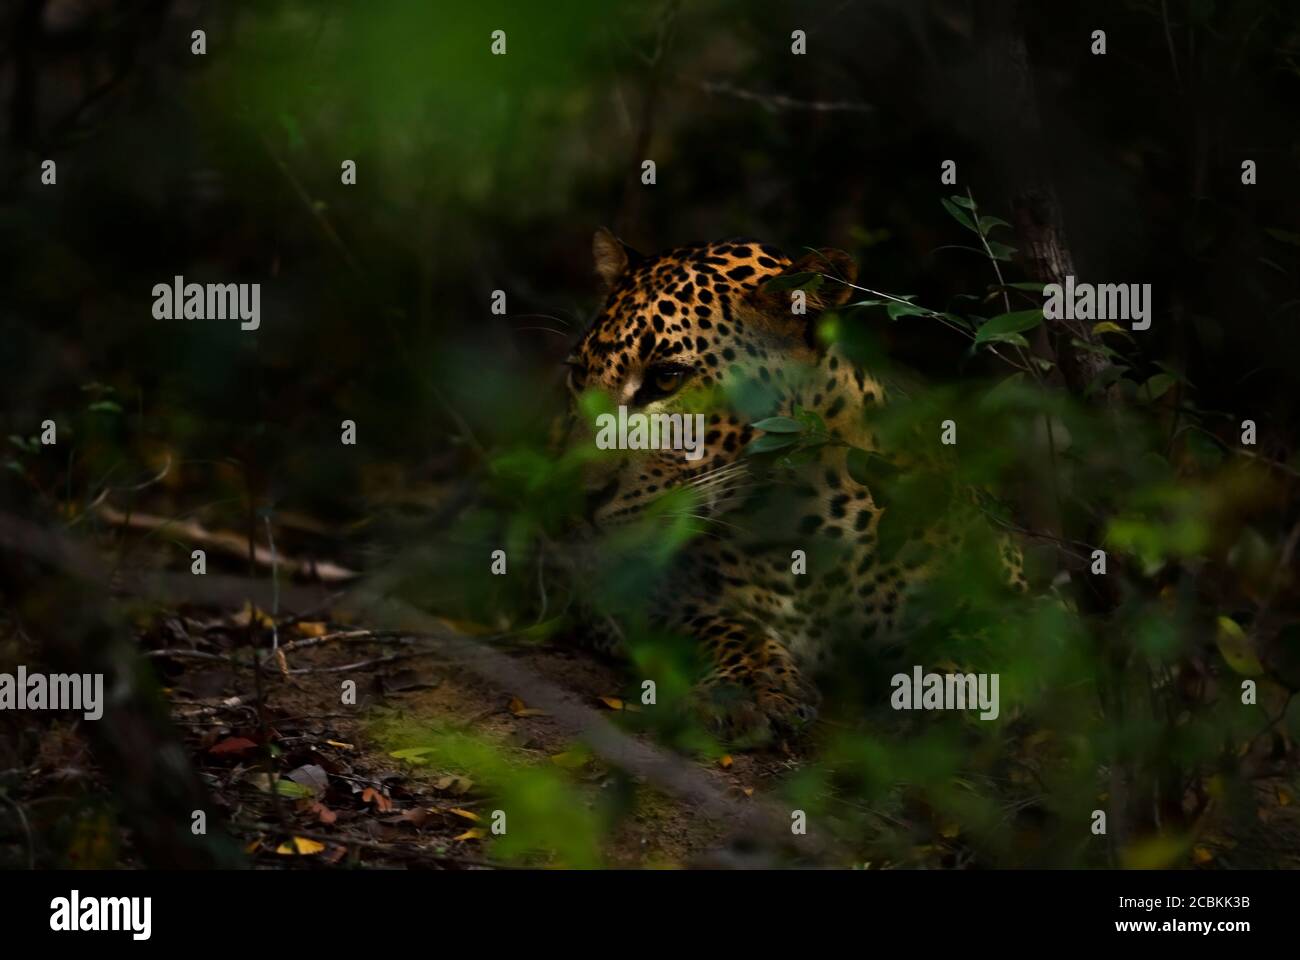 Léopard du Sri Lanka - Panthera pardus kotiya, beau chat sauvage des forêts et des terres boisées du Sri Lanka, Sri Lanka. Banque D'Images